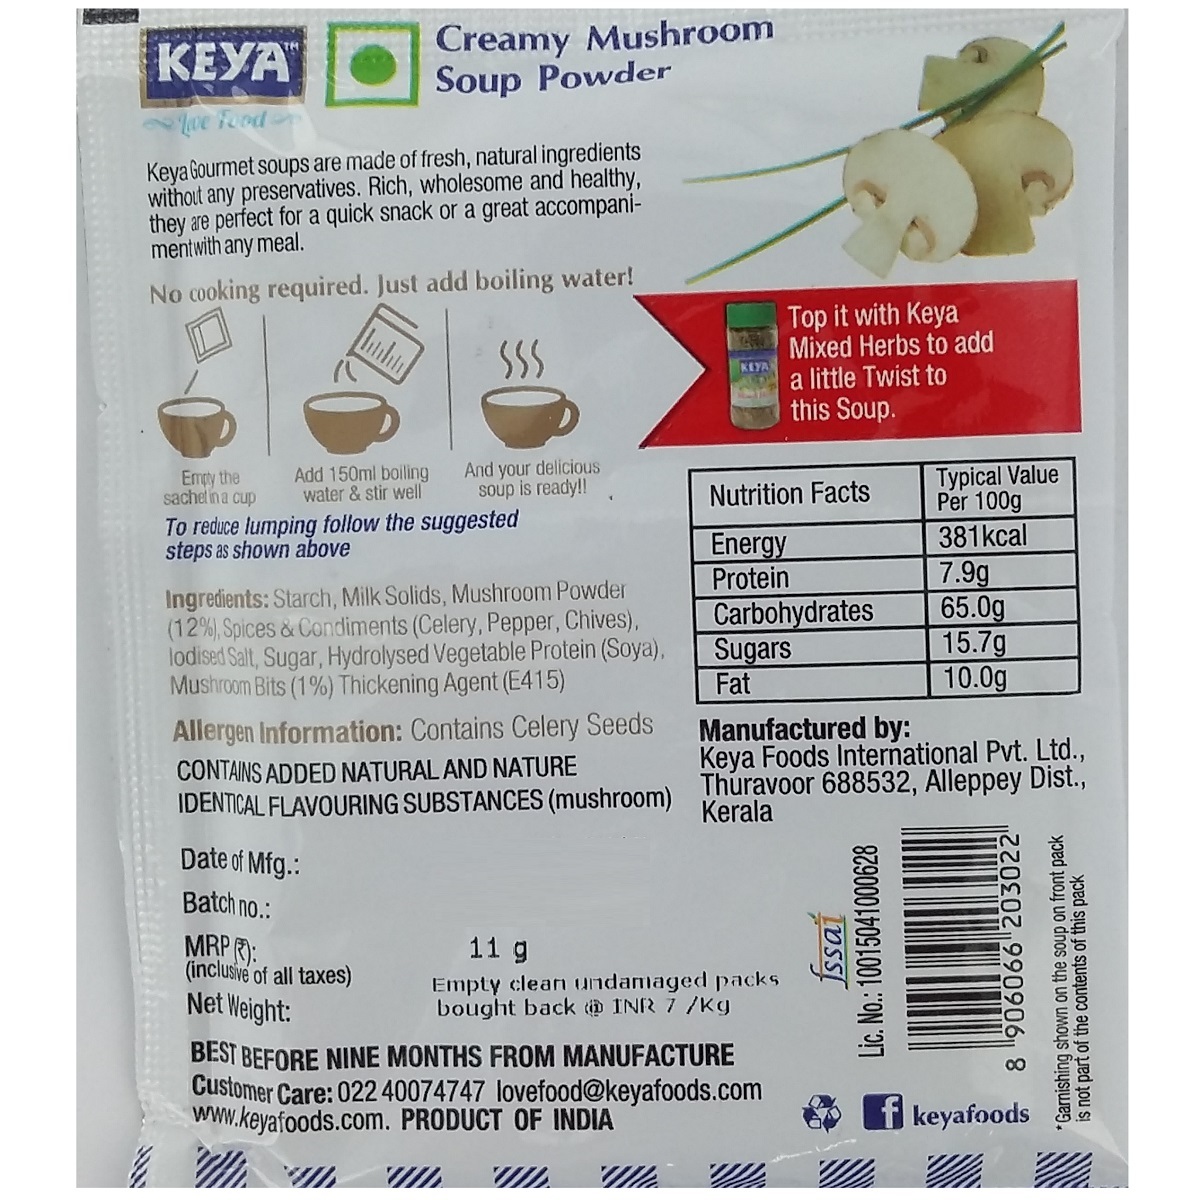 Keya Instant Soup Creamy Mushroom 14g